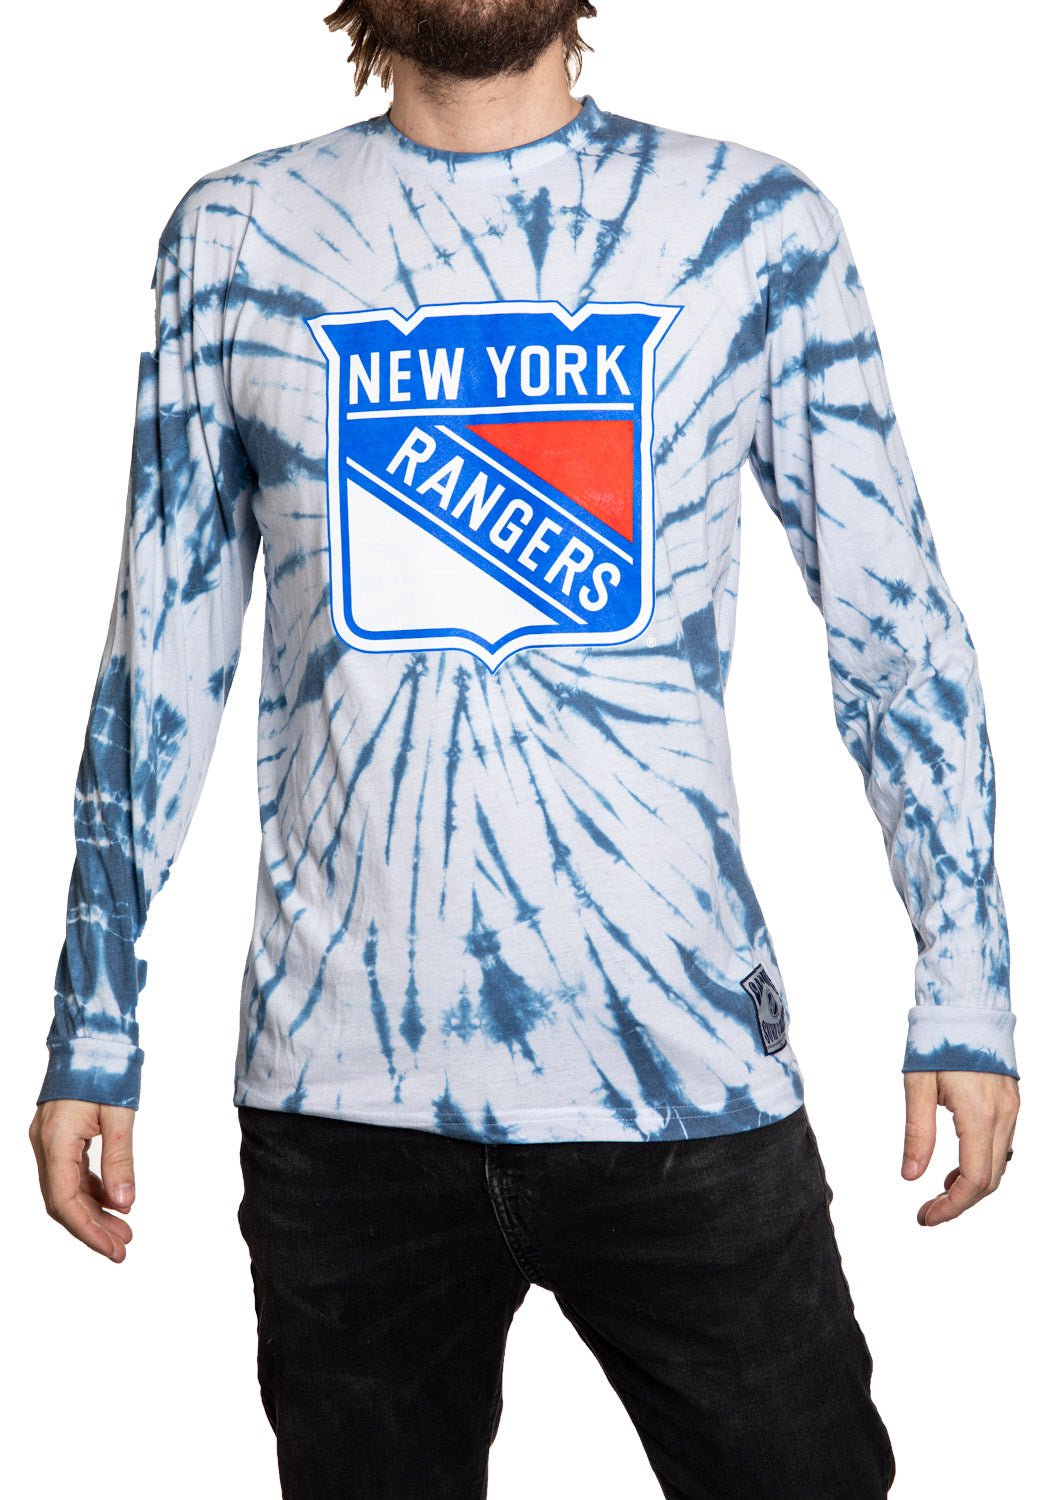 New York Rangers Spiral Tie Dye Longsleeve Shirt